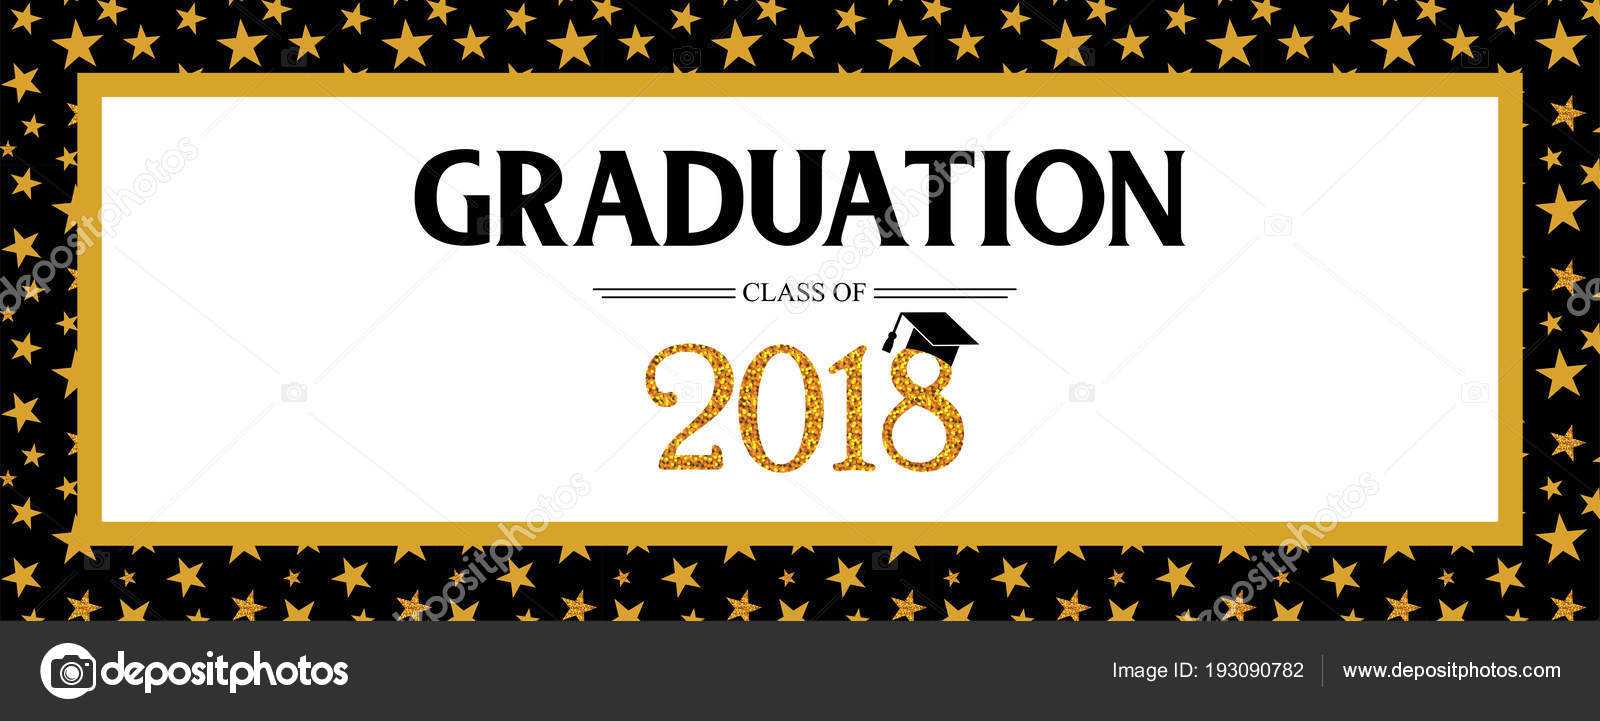 Graduation Class Of 2018 Greeting Banner Template. Vector With Graduation Banner Template